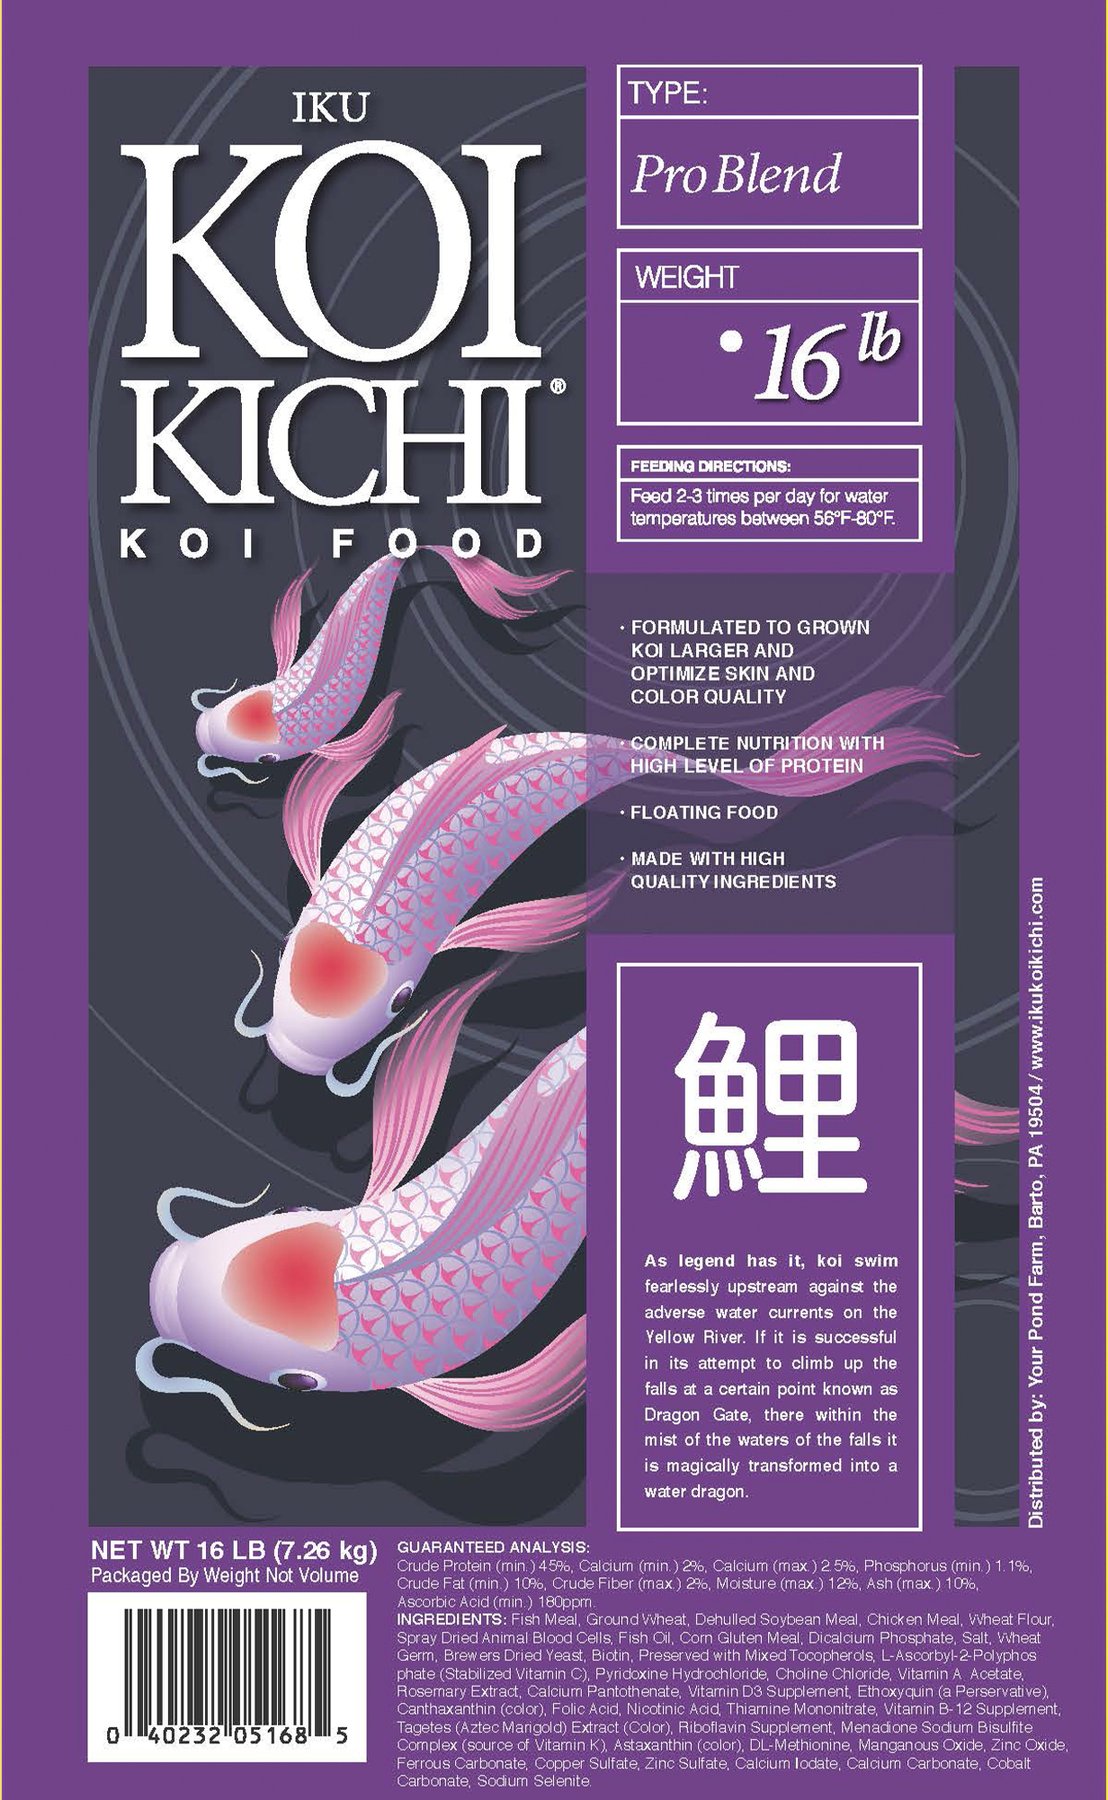 Iku Koi Kichi Pro Blend Koi Fish Food 